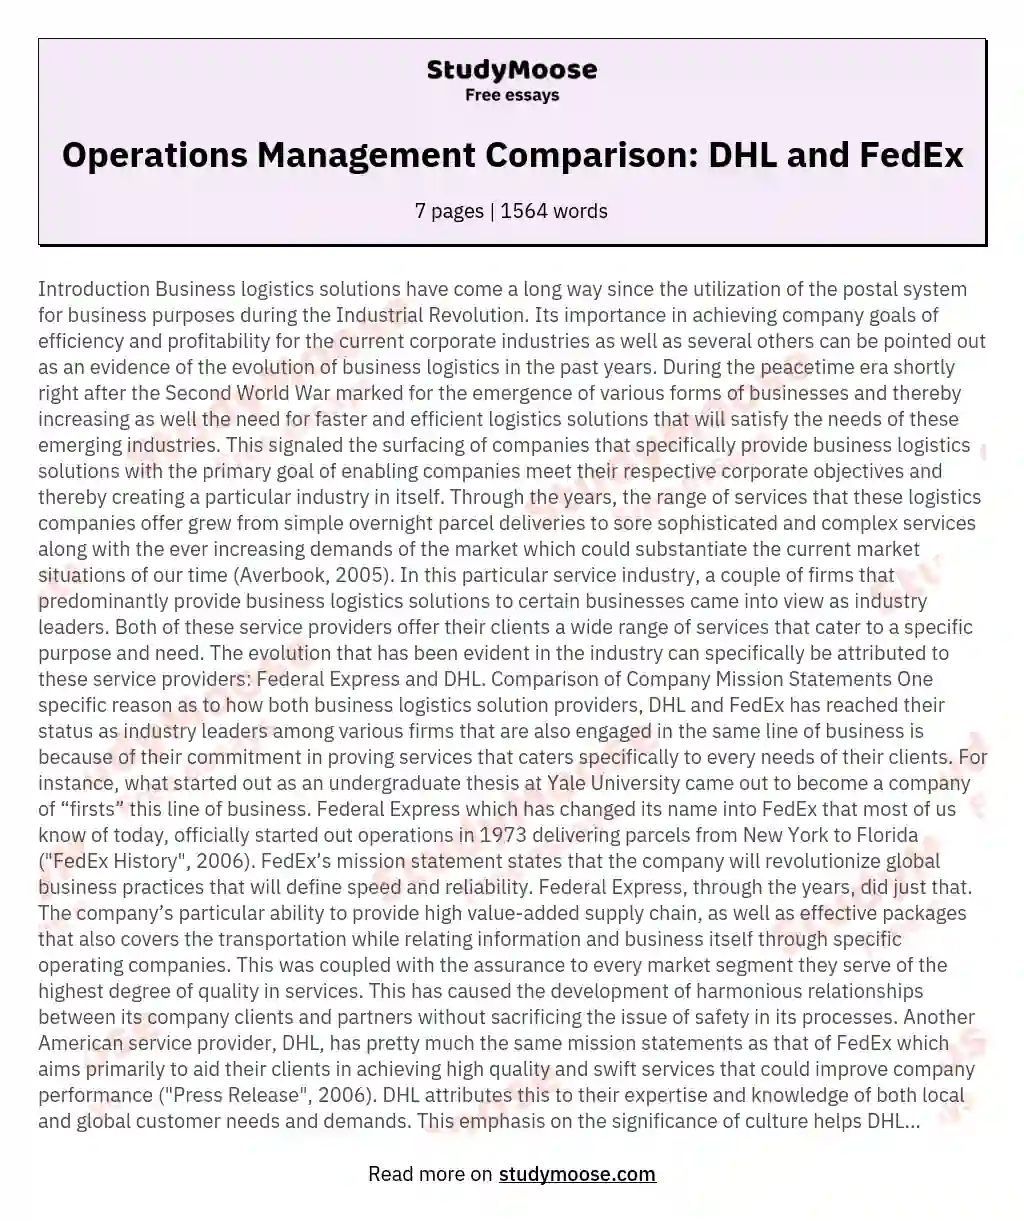 Operations Management Comparison: DHL and FedEx essay